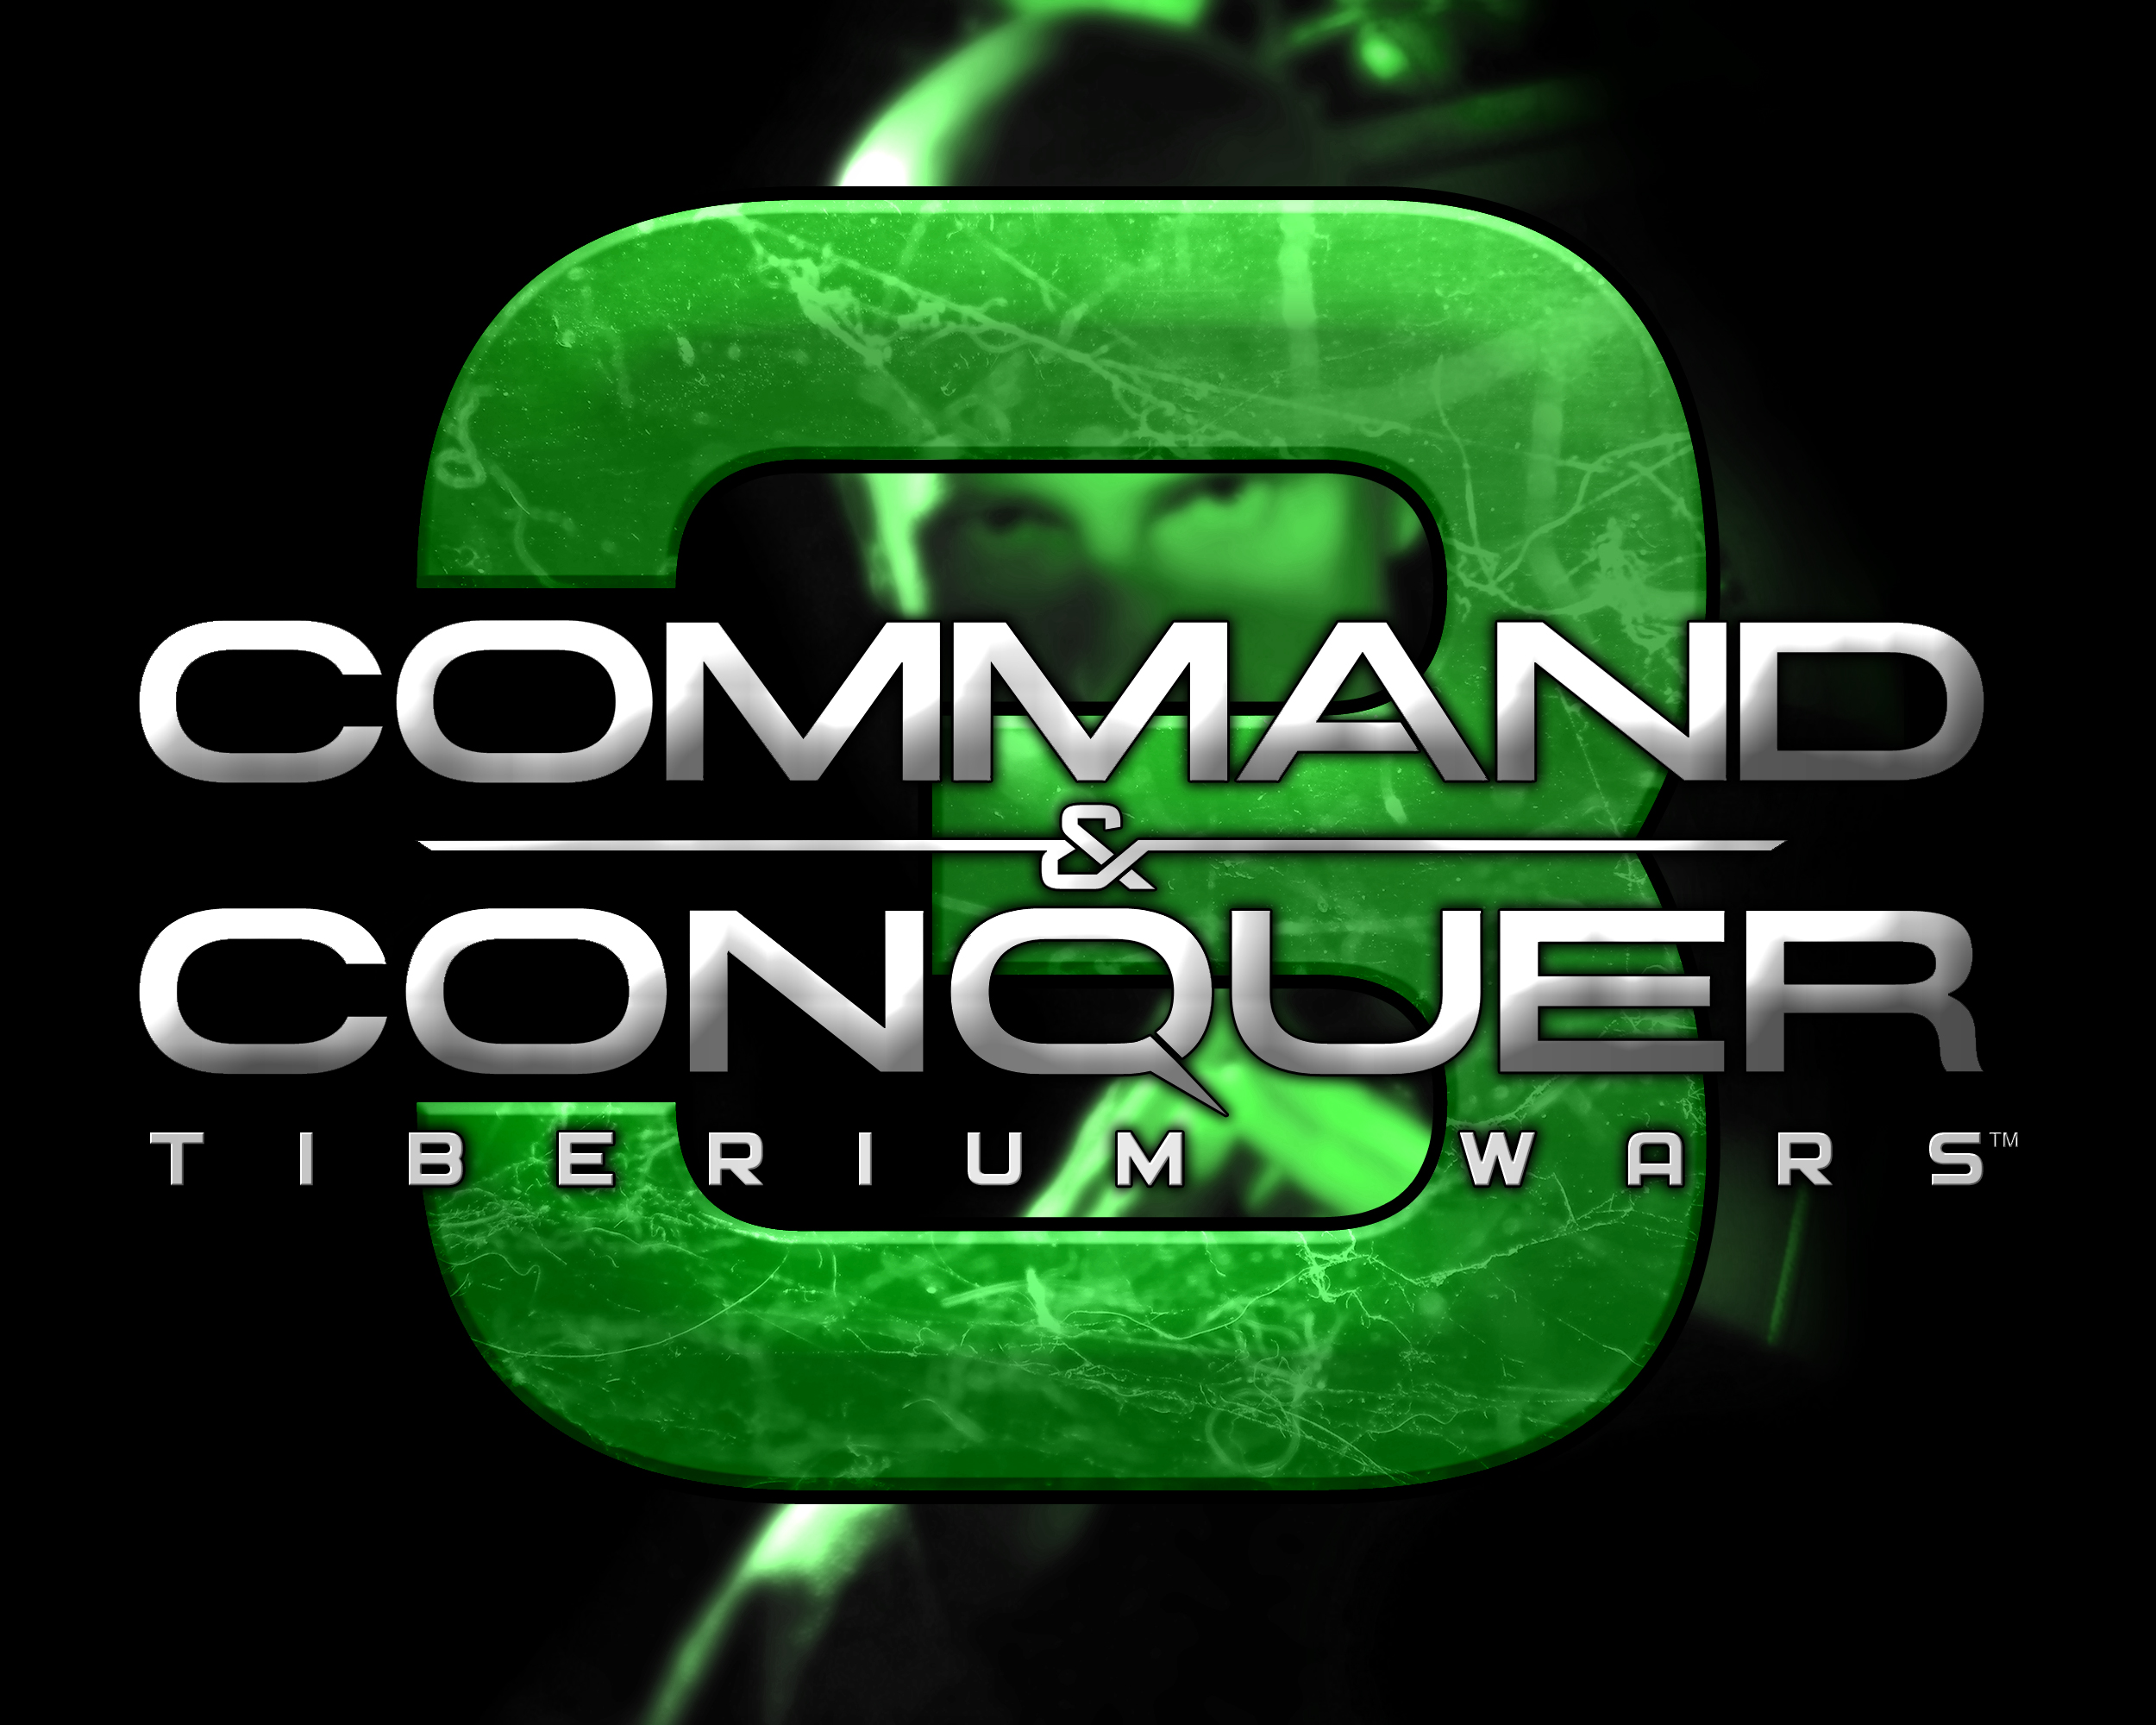 Command And Conquer 3 Tiberium Wars | НОД | Городок в США